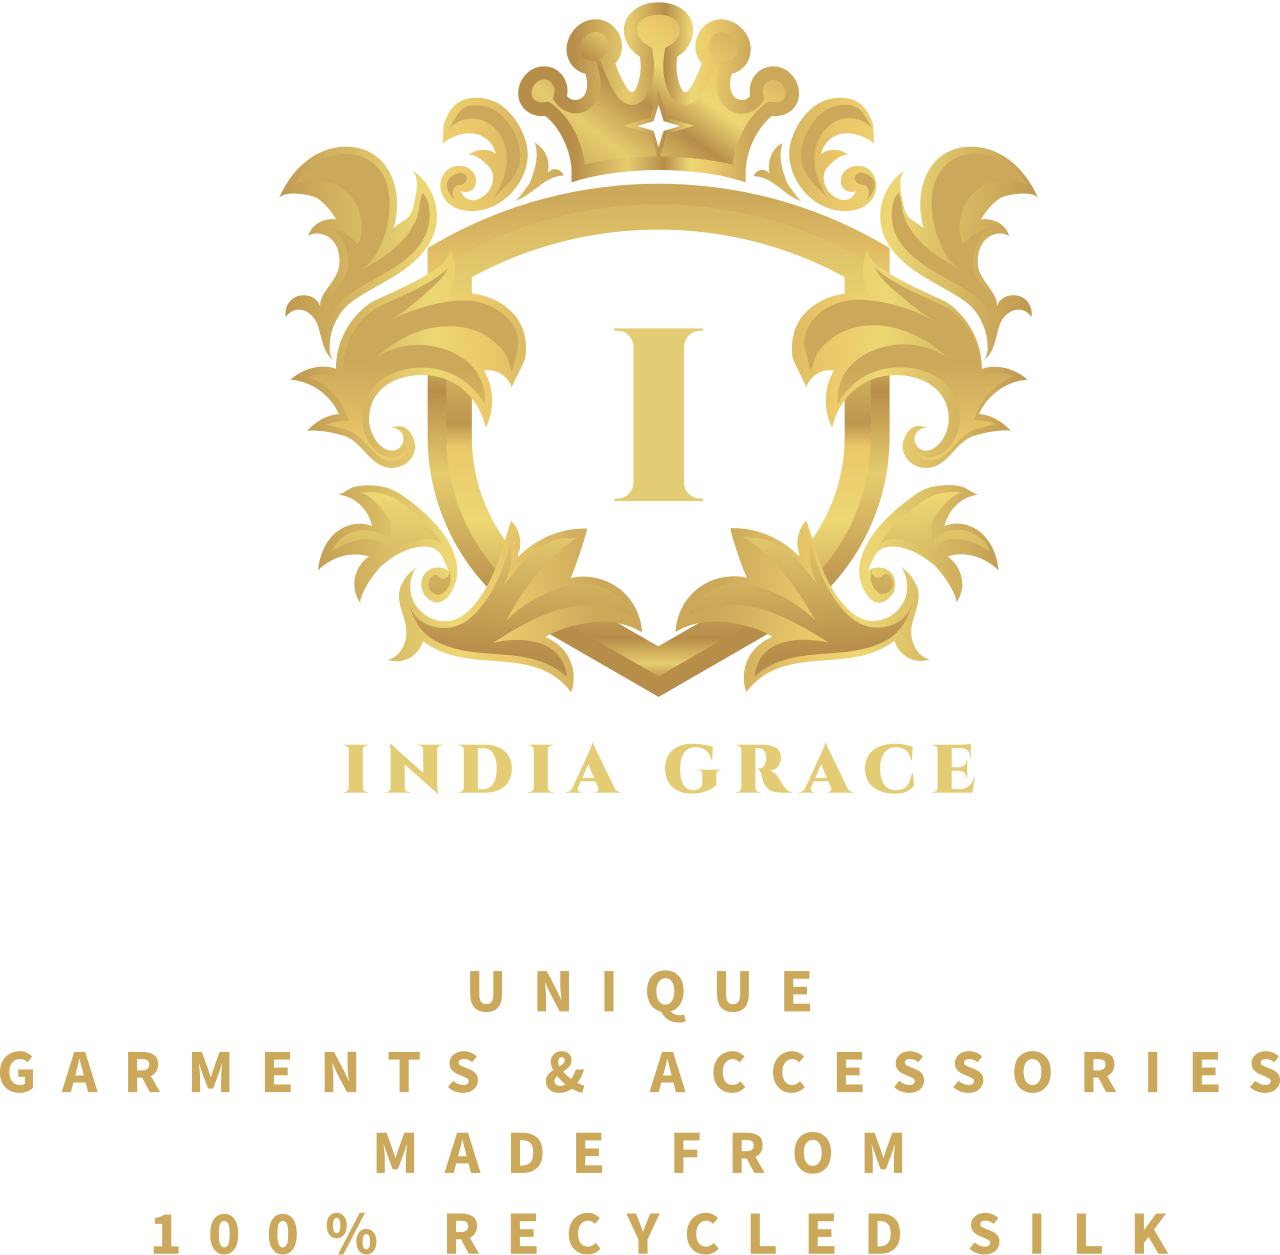 India Grace's web page